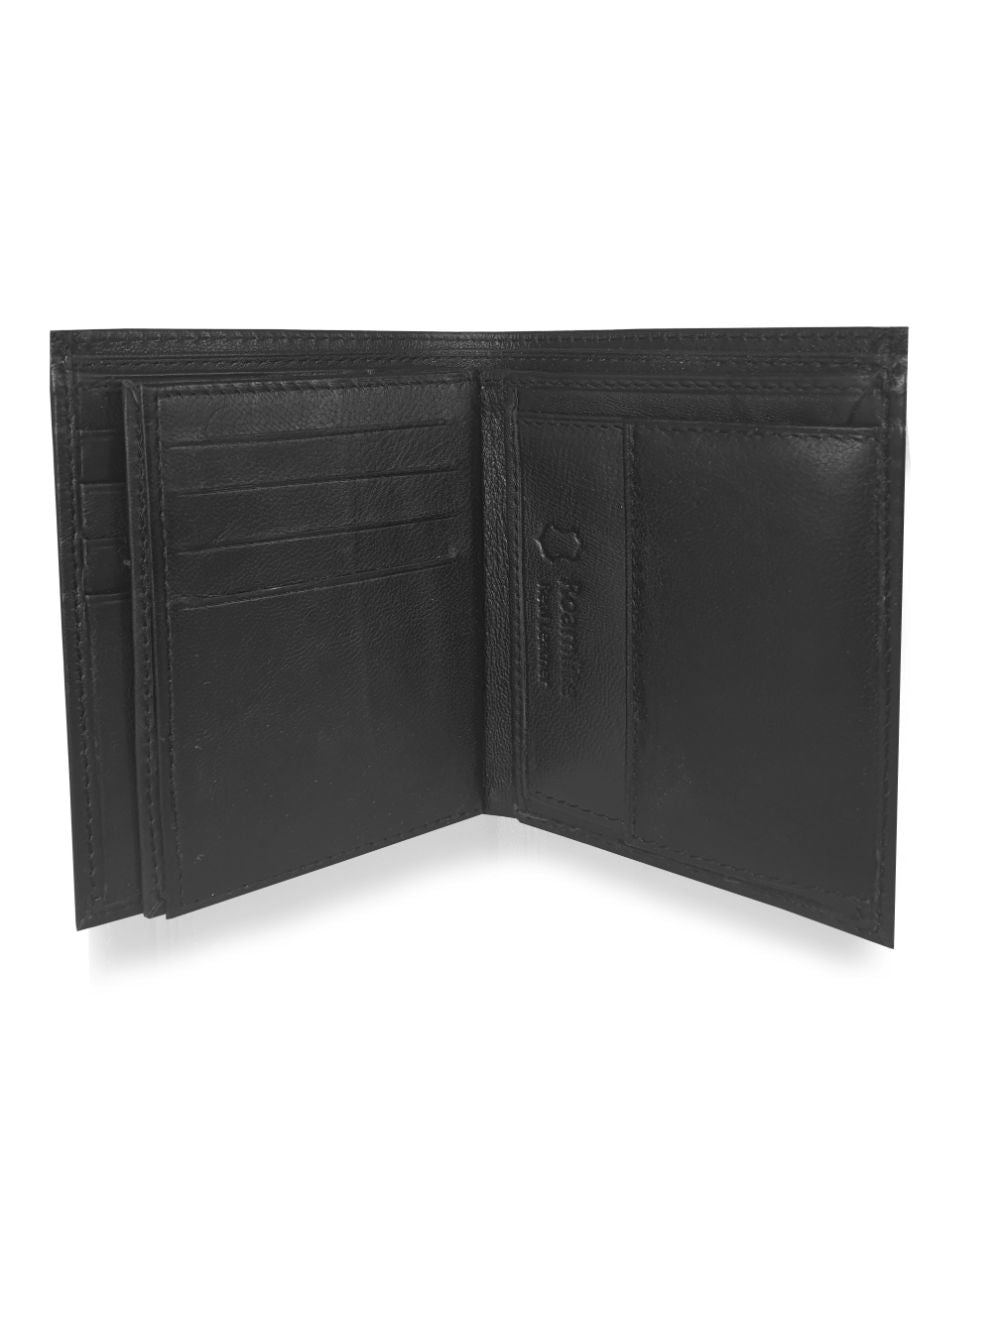 Roamlite Mens suit Wallet Black Leather RL23  open 4